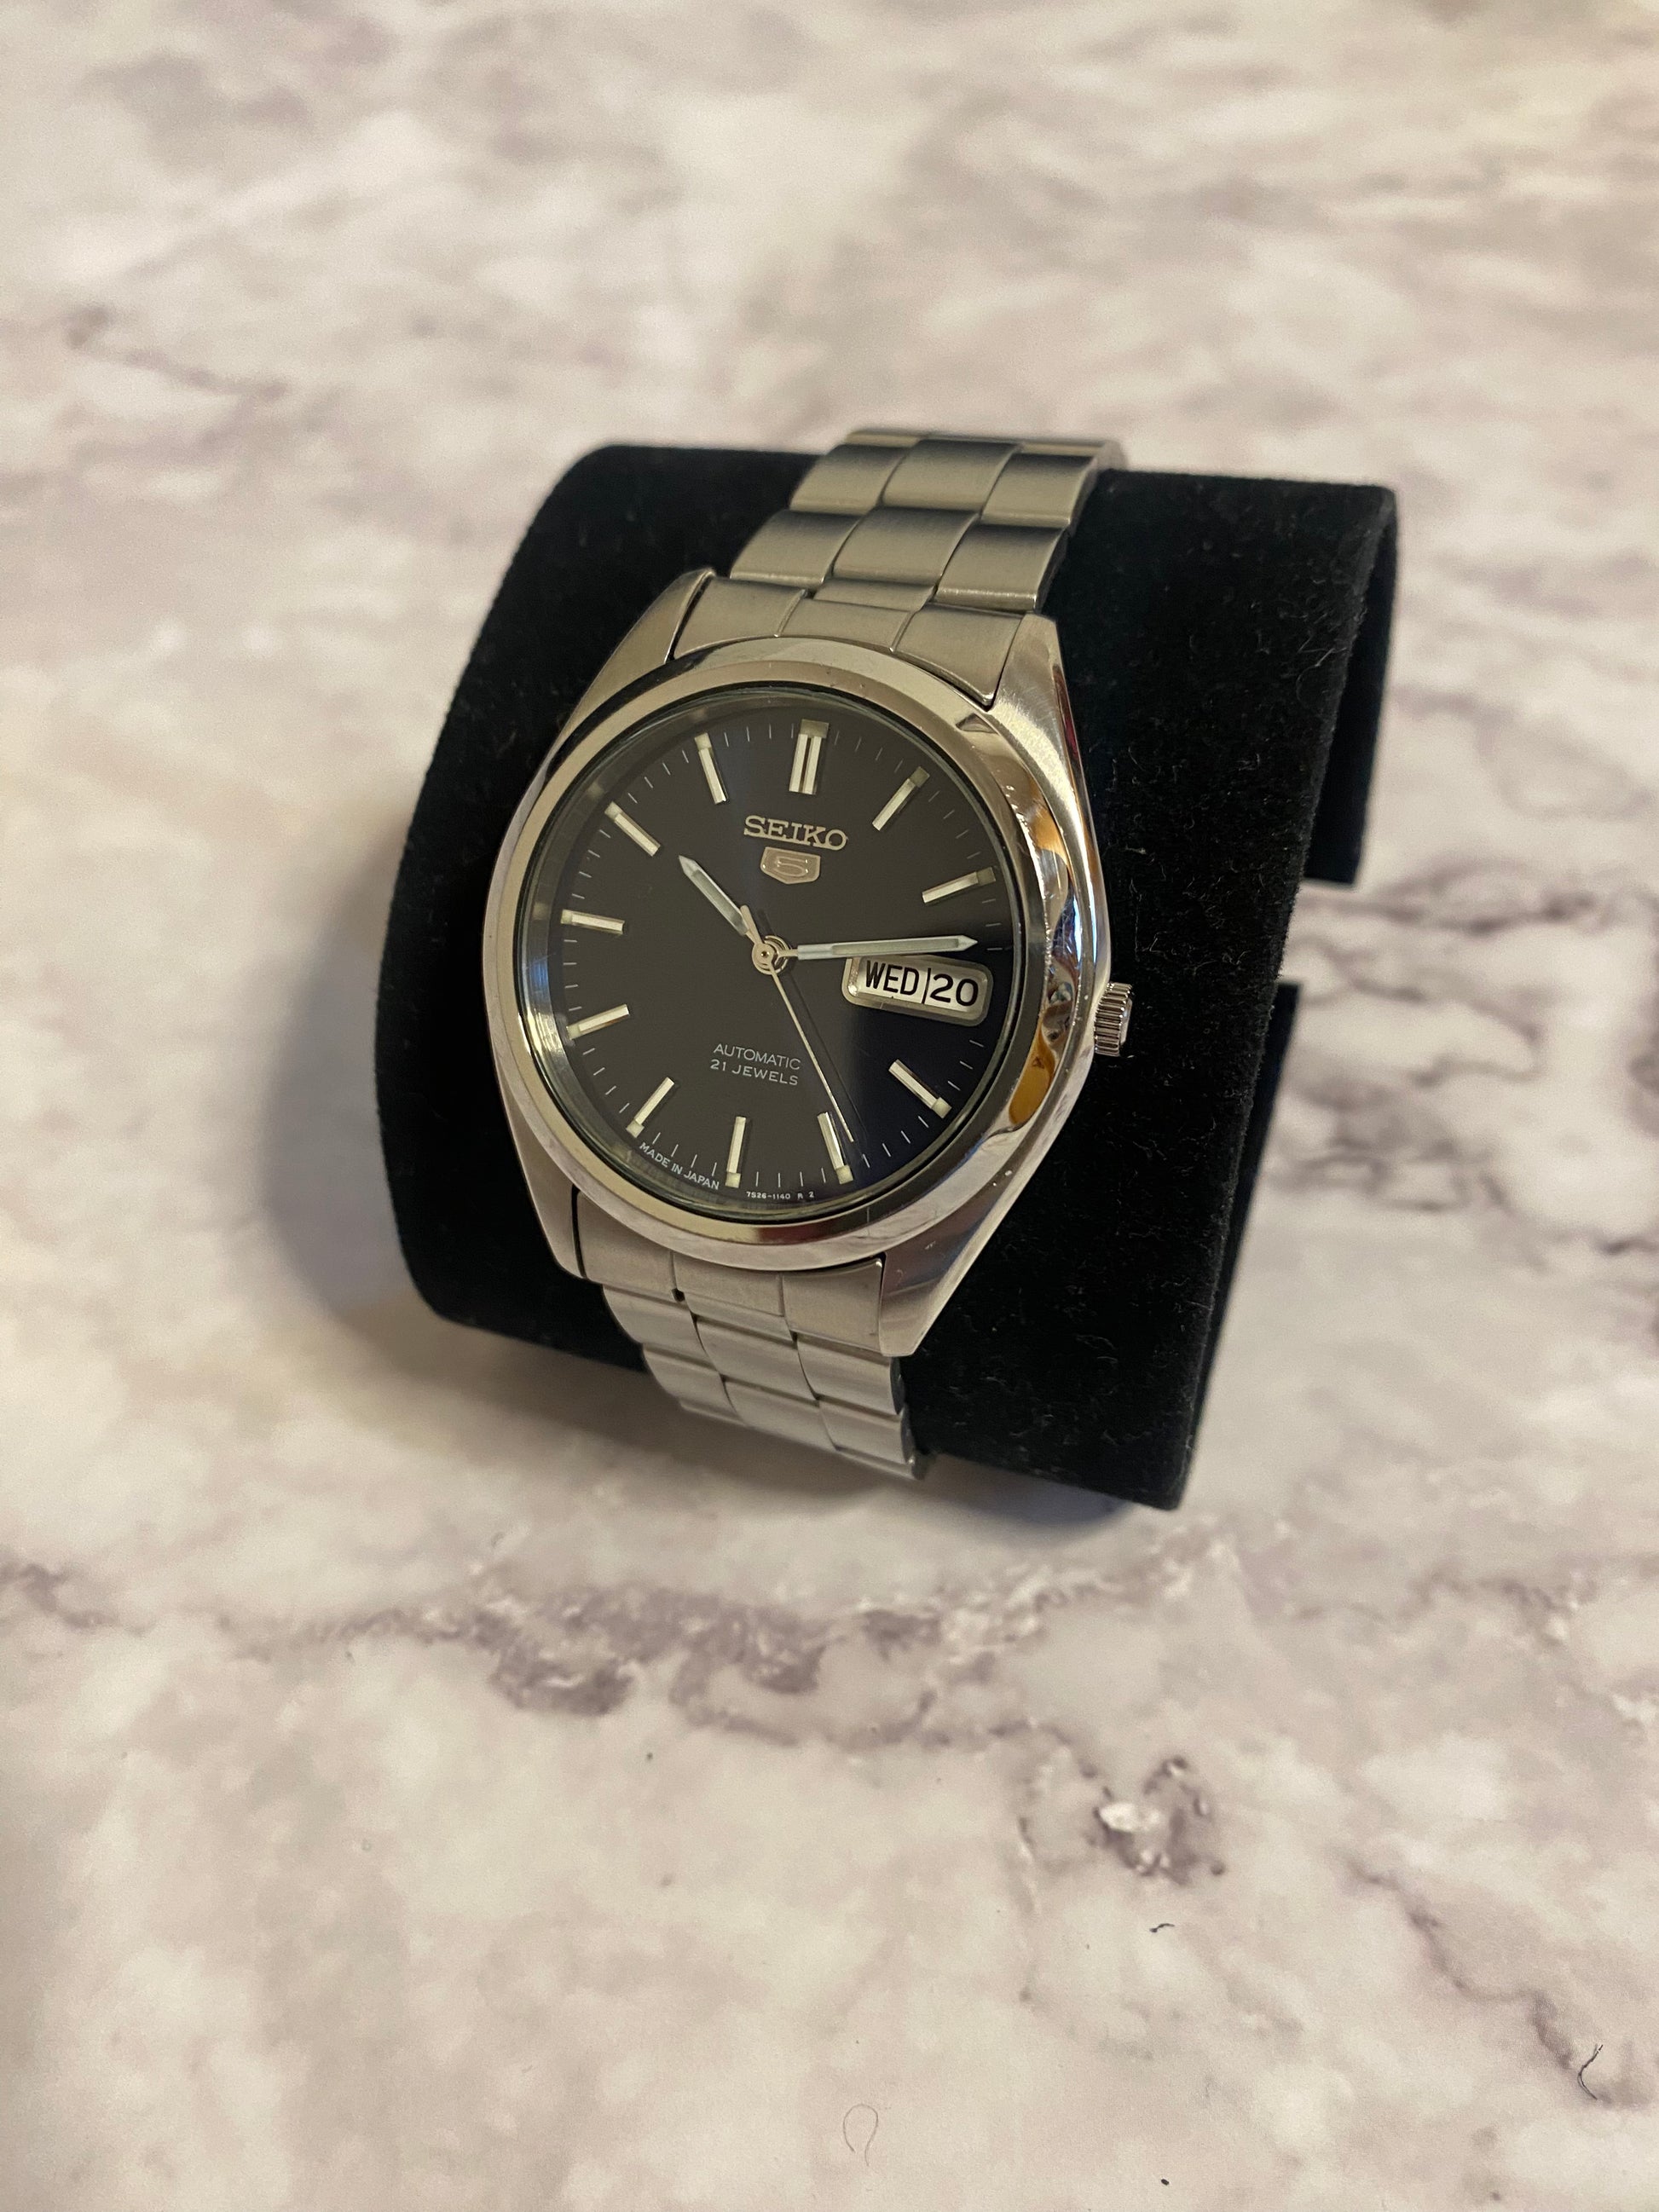 Seiko 7S26-0060 Automatic – The Wrist Watcher